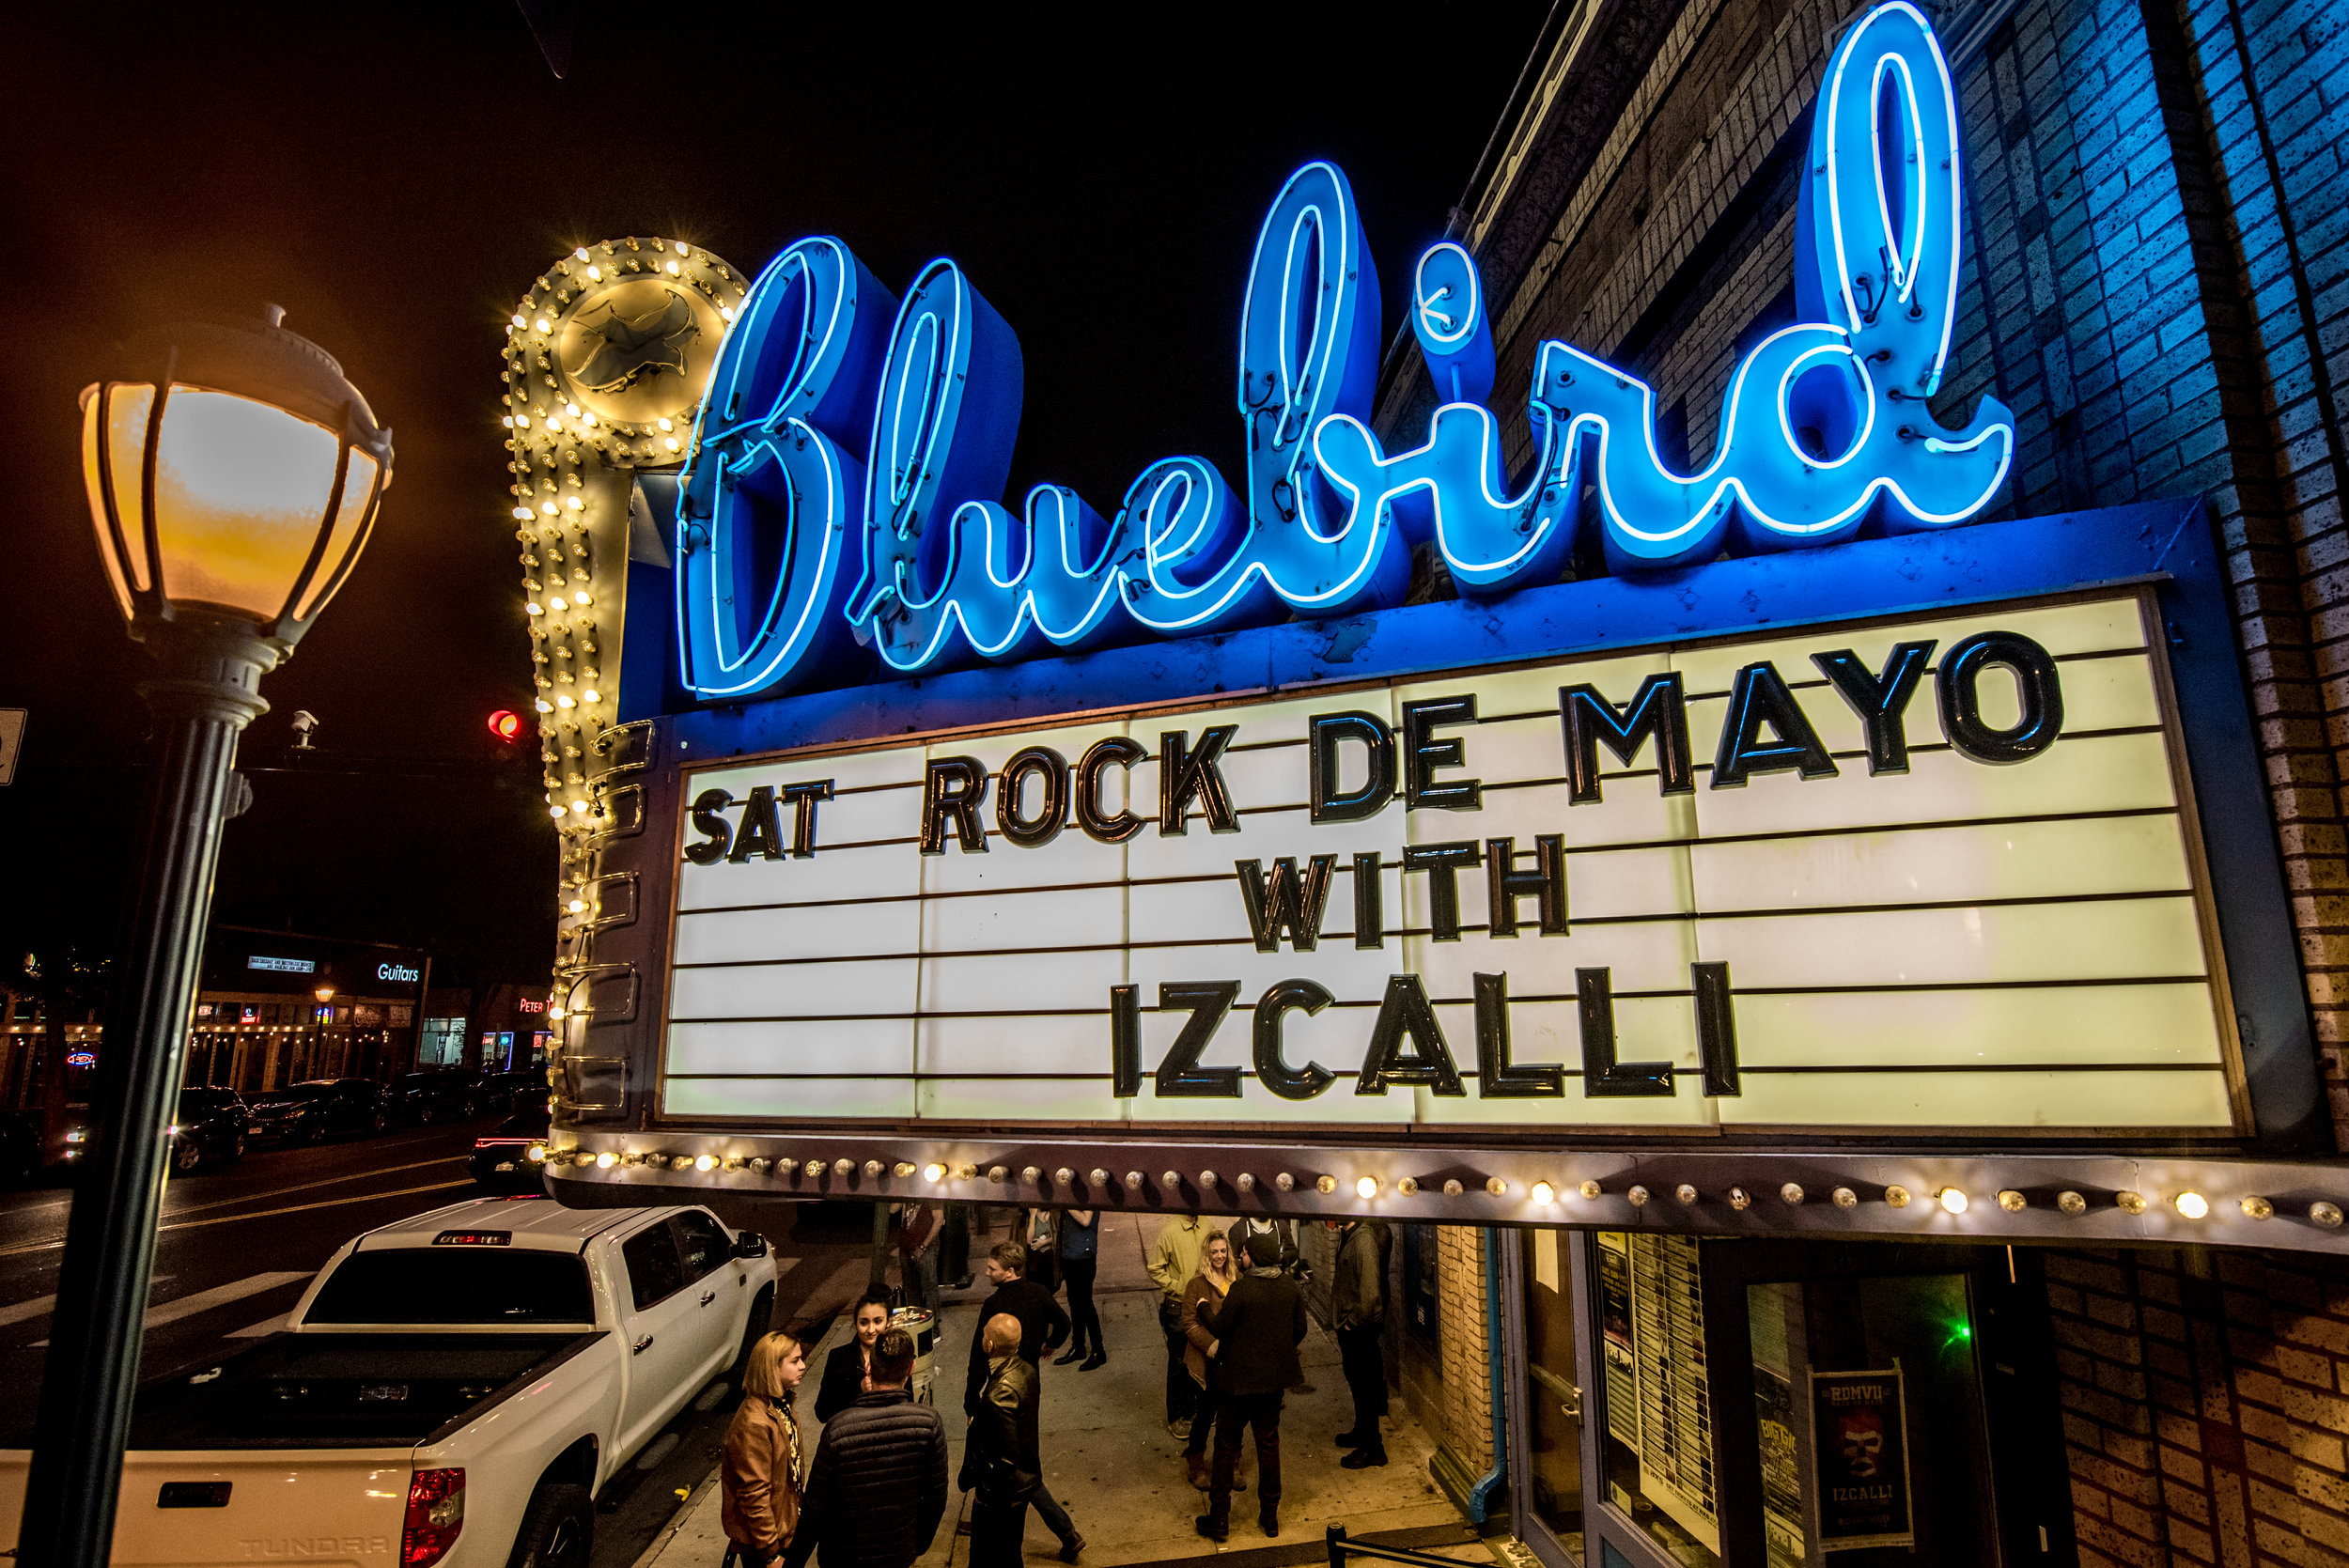 iZCALLi_Rock de Mayo-1.jpg